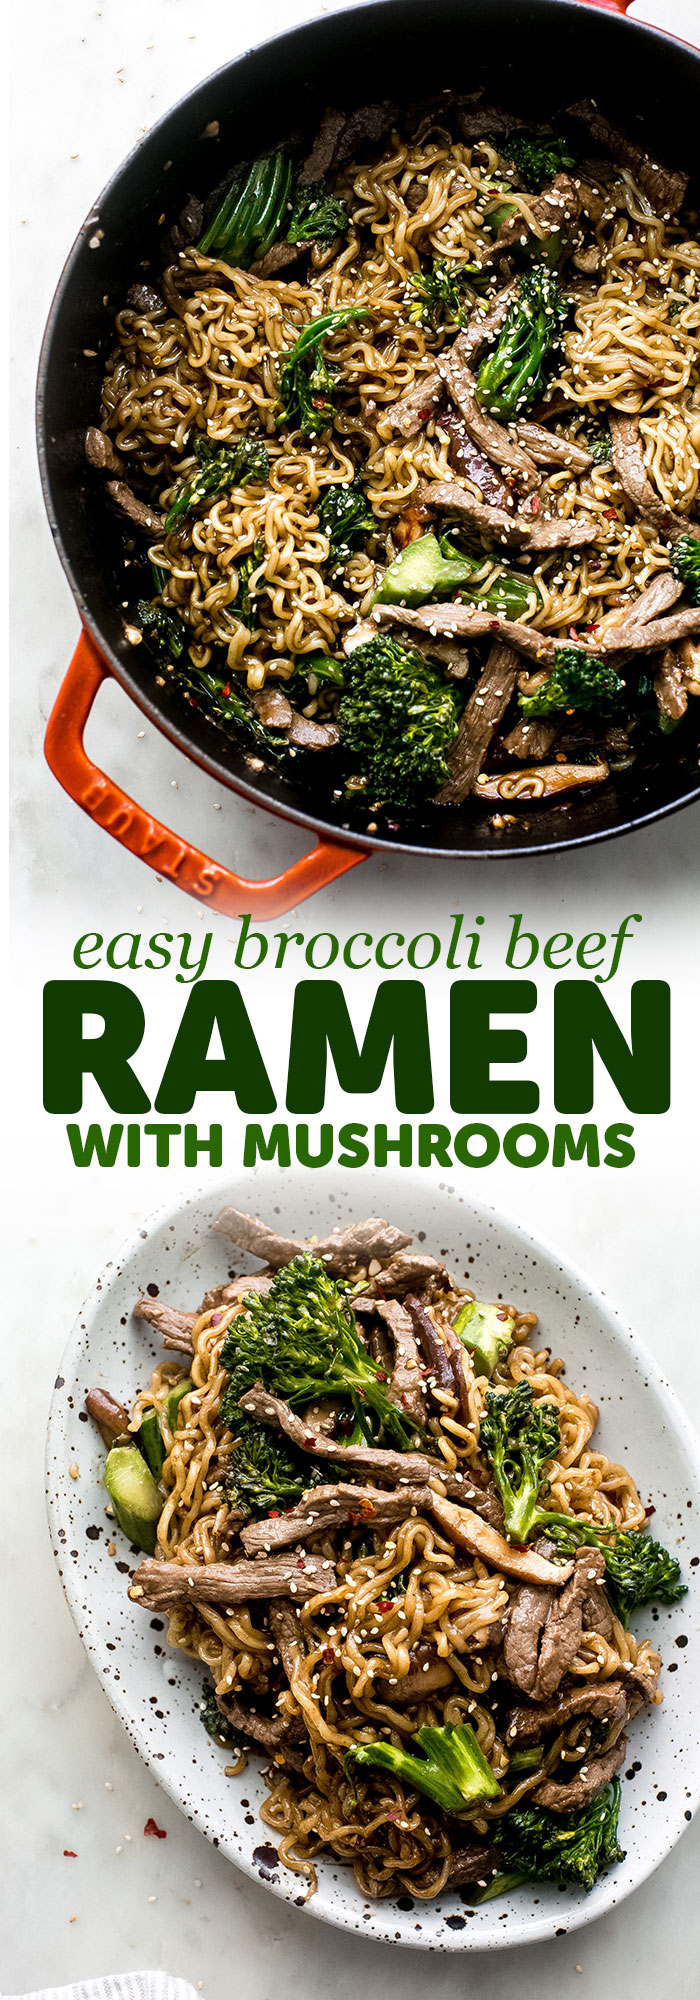 Mushroom Broccoli Beef Ramen - Learn how to make a quick and easy weeknight-friendly stir-fried broccoli beef ramen with mushrooms that the whole family will love! #ramen #ramenstirfry #broccolibeef #broccolibeeframen #easydinner #dinnerrecipes | Littlespicejar.com